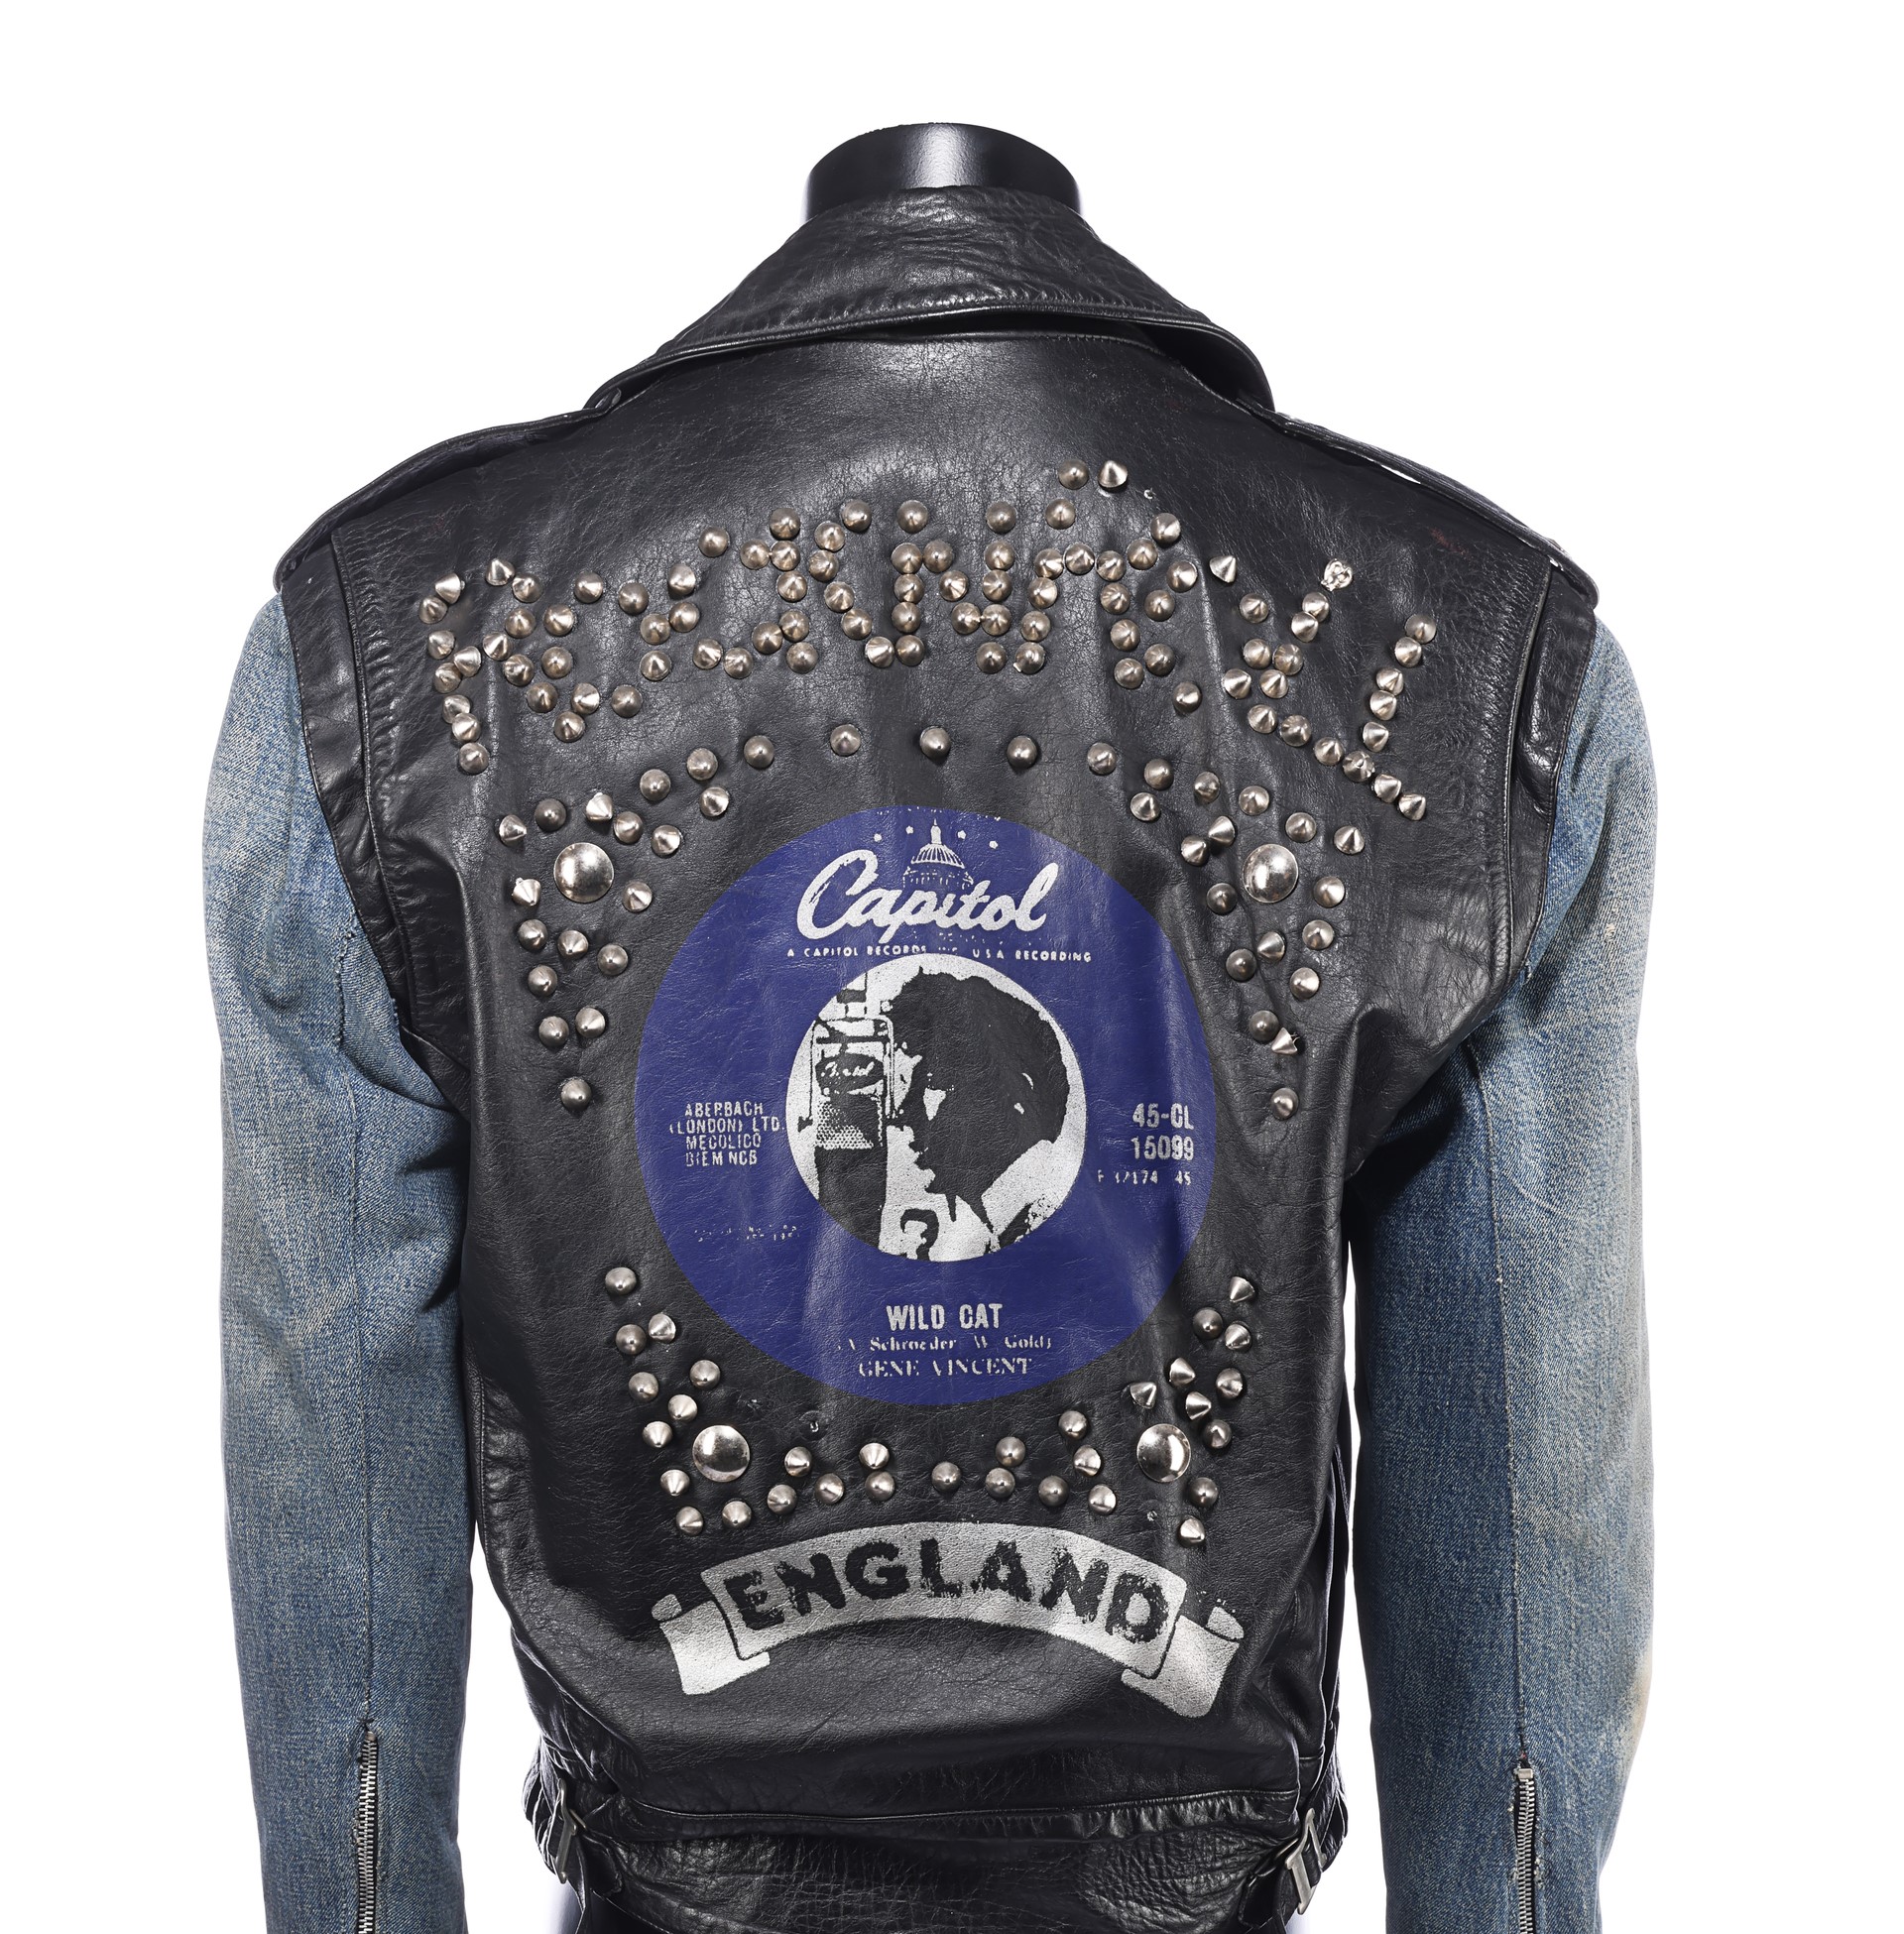 George Michael’s “La Rocka” jacket